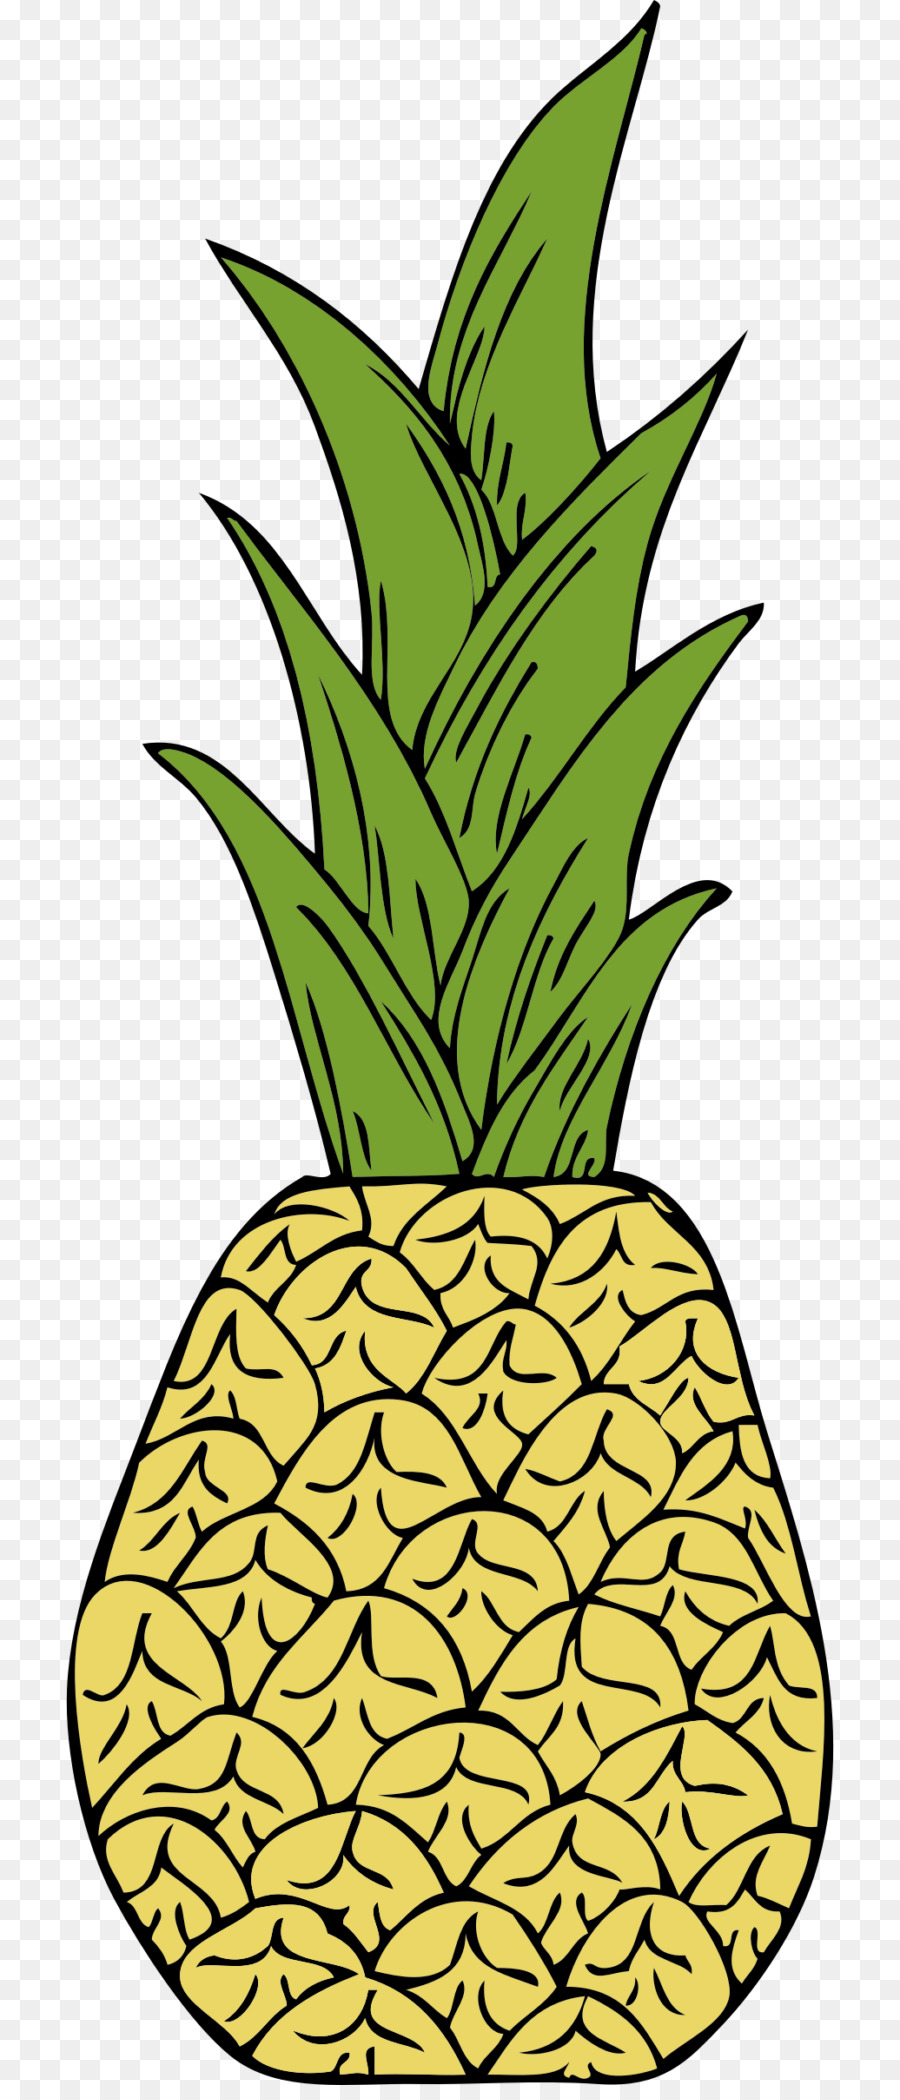 Ananas Frutto Clip art - Ananas